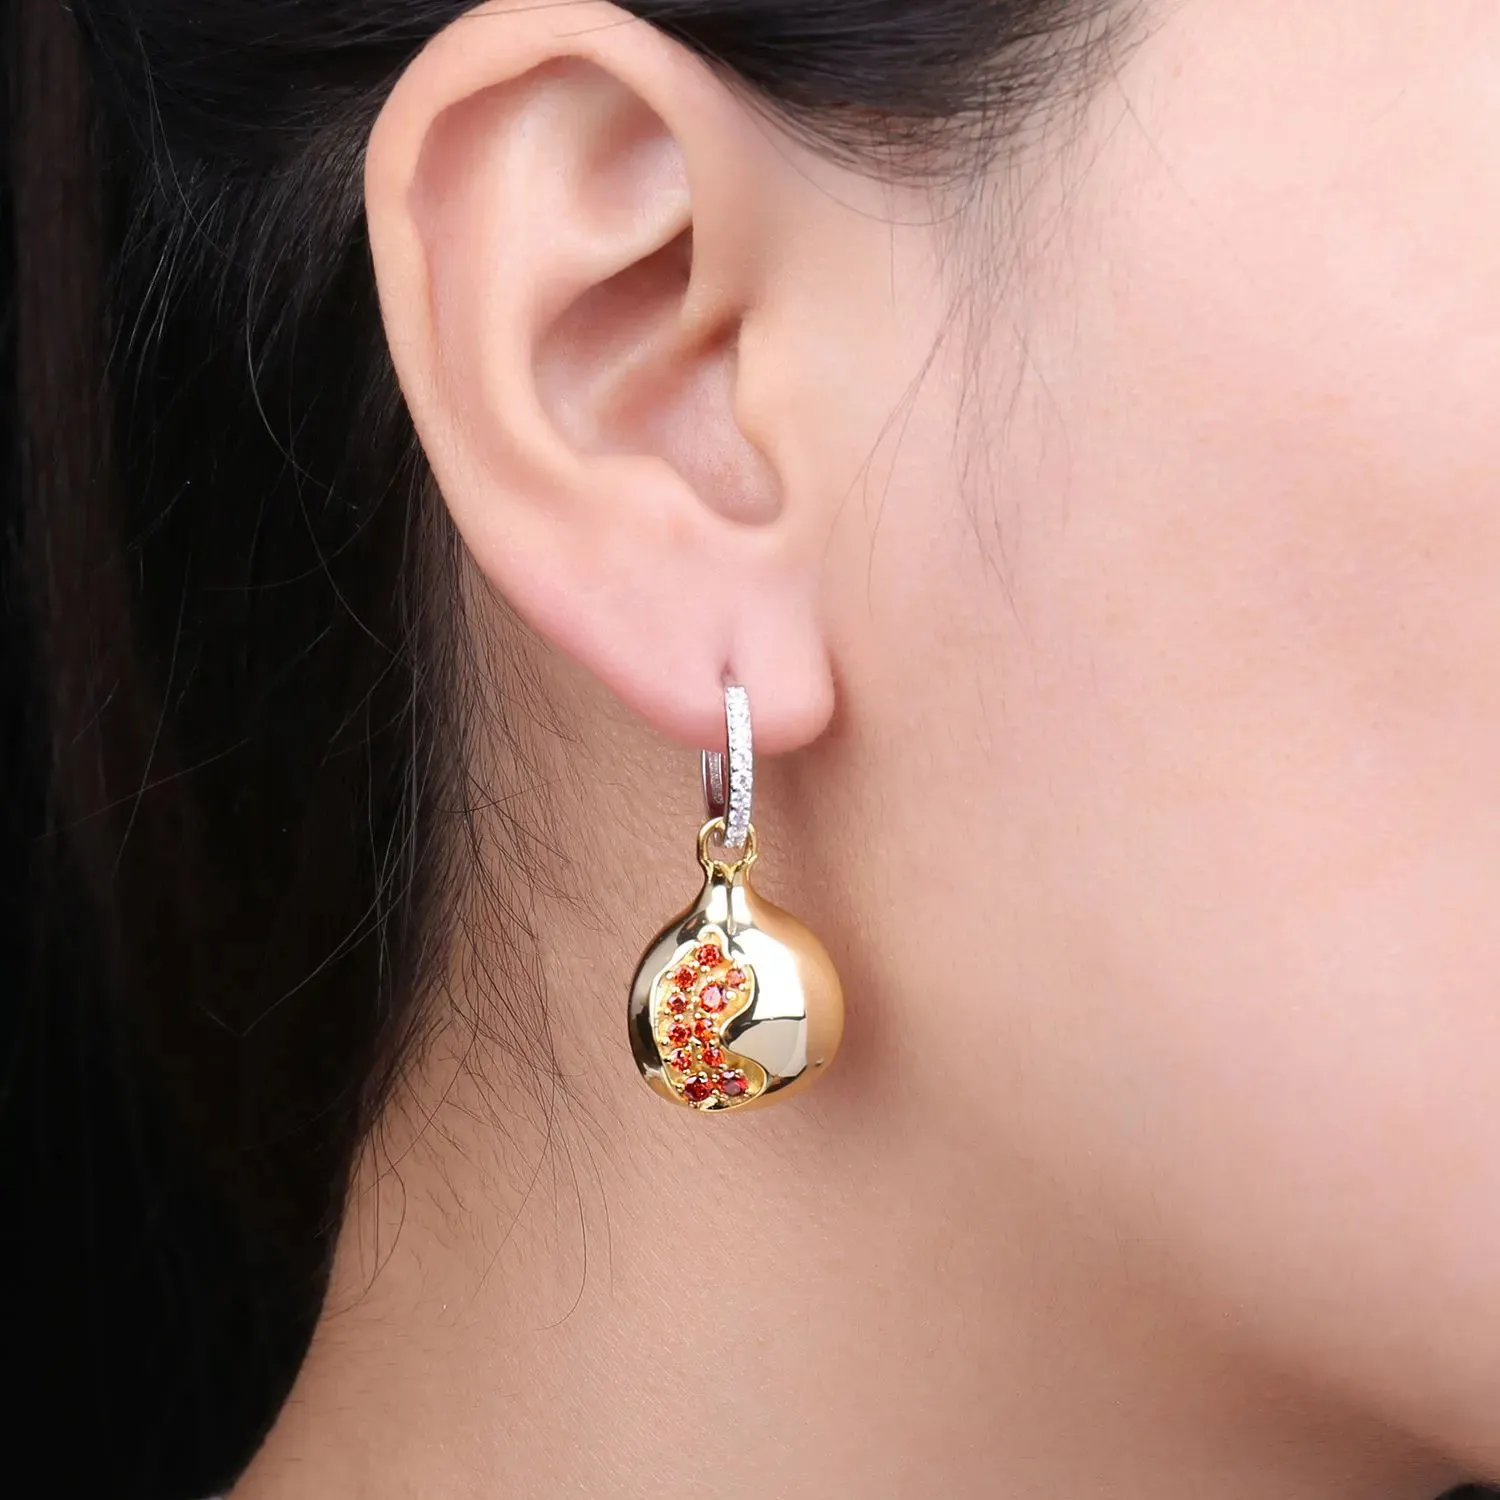 34% OFF on Vinayak Brown American Diamond Stud Earrings on Snapdeal |  PaisaWapas.com